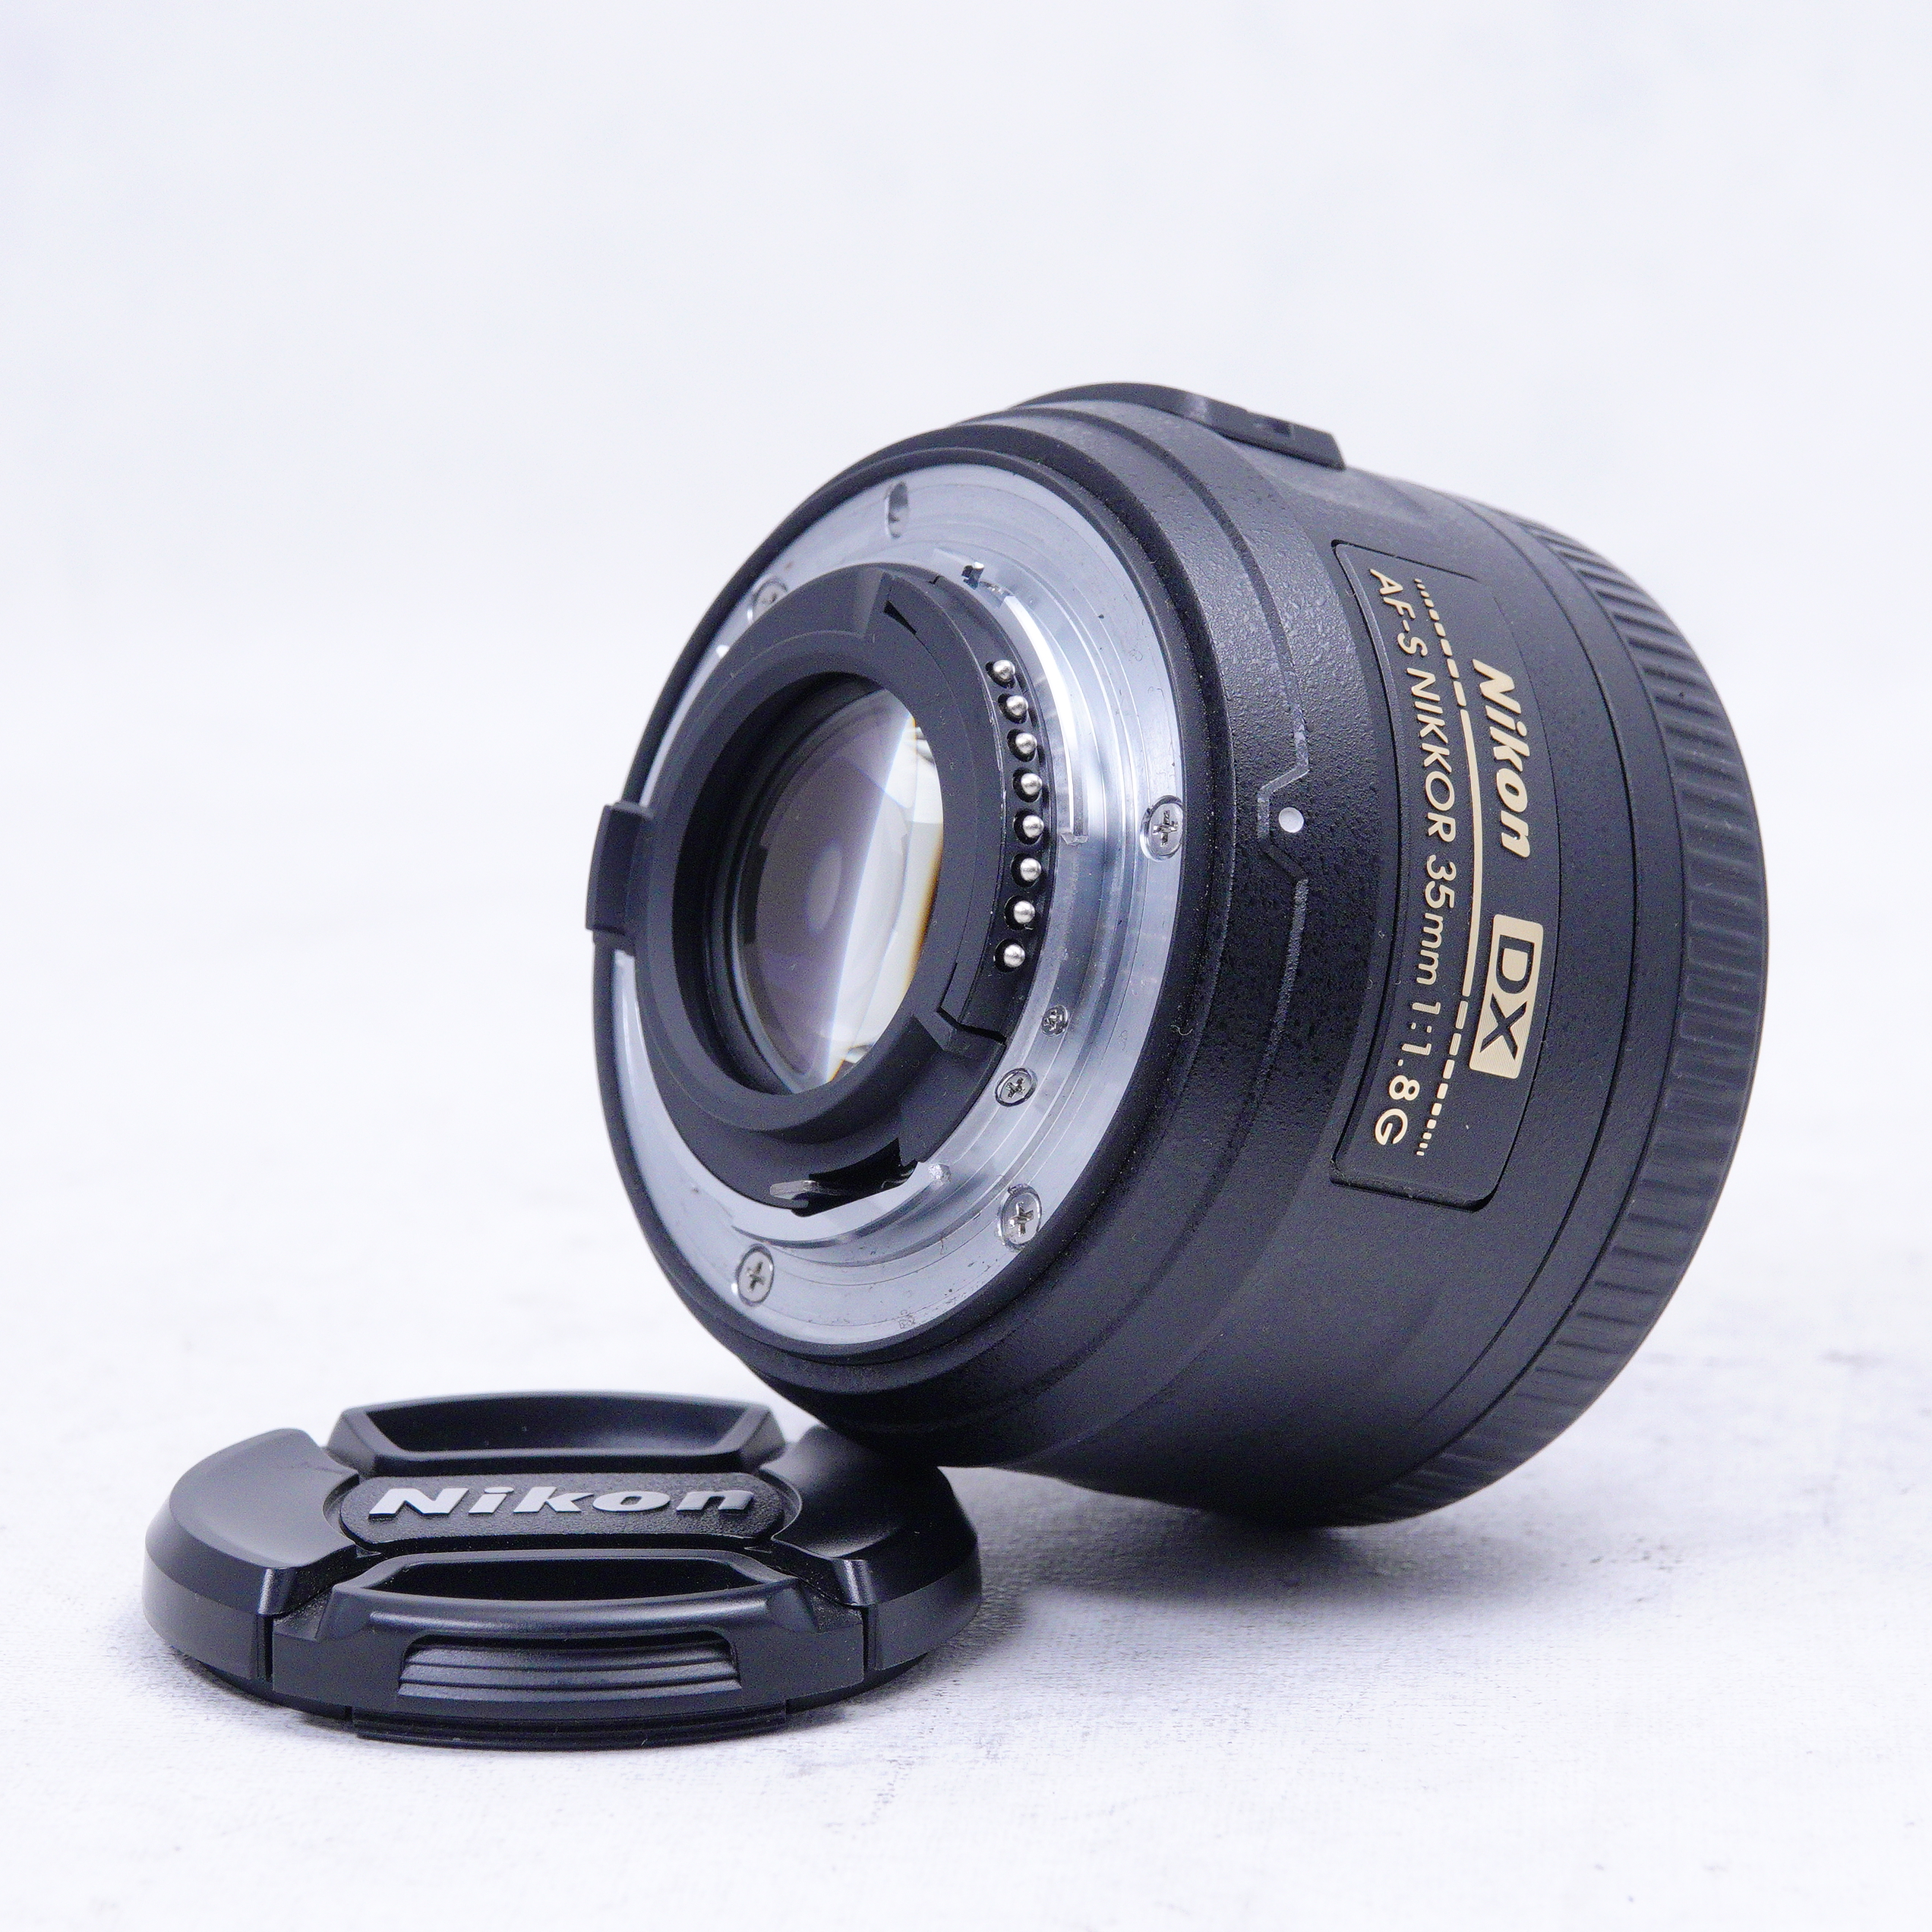 Lente Nikon 35mm f/1.8G DX (nuevo)